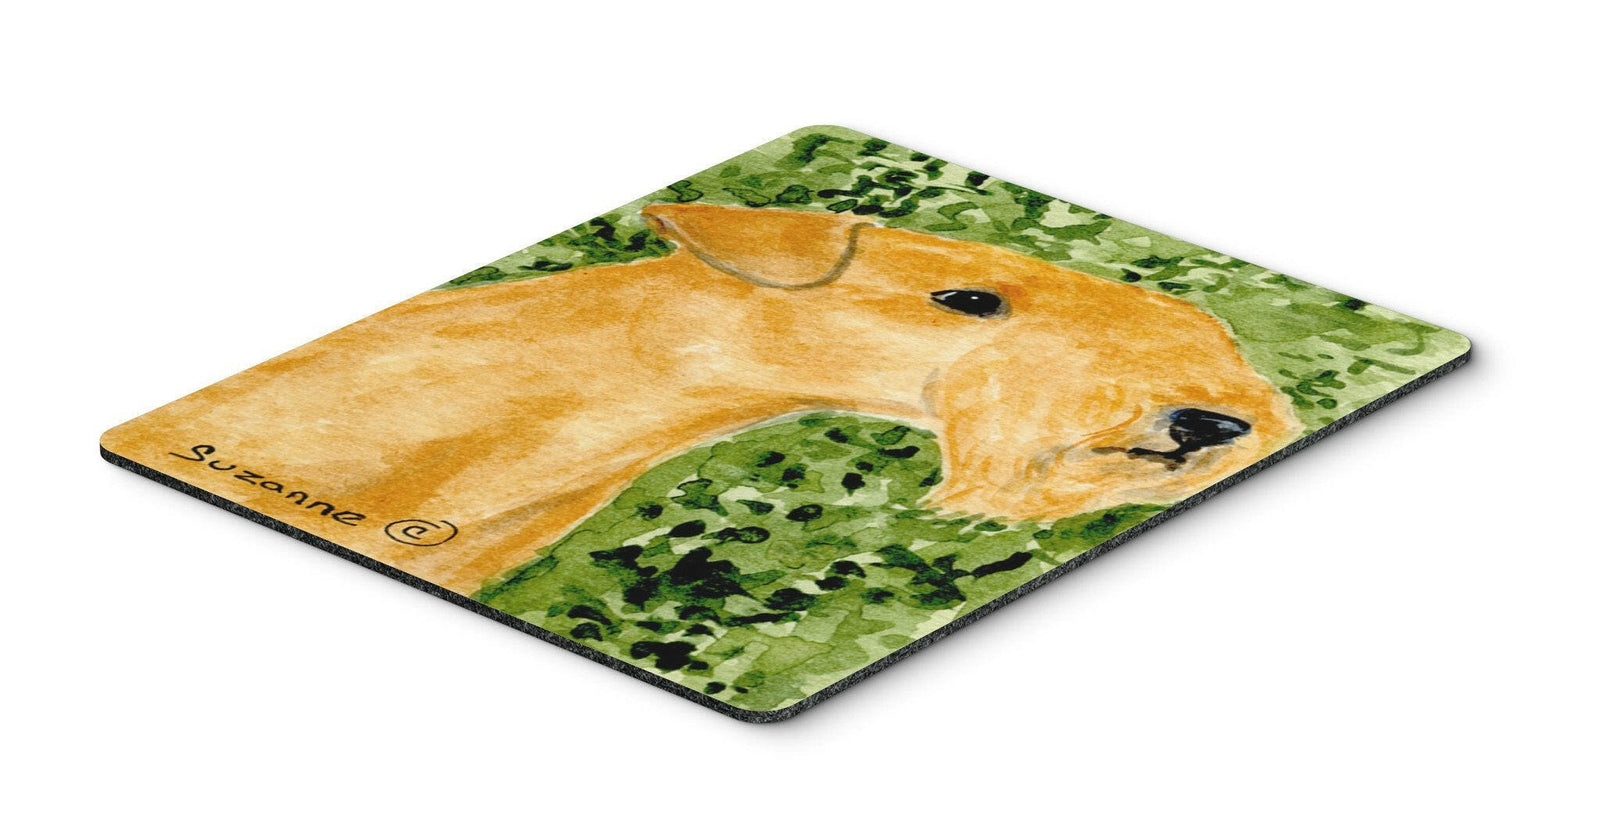 Lakeland Terrier Mouse Pad / Hot Pad / Trivet by Caroline's Treasures